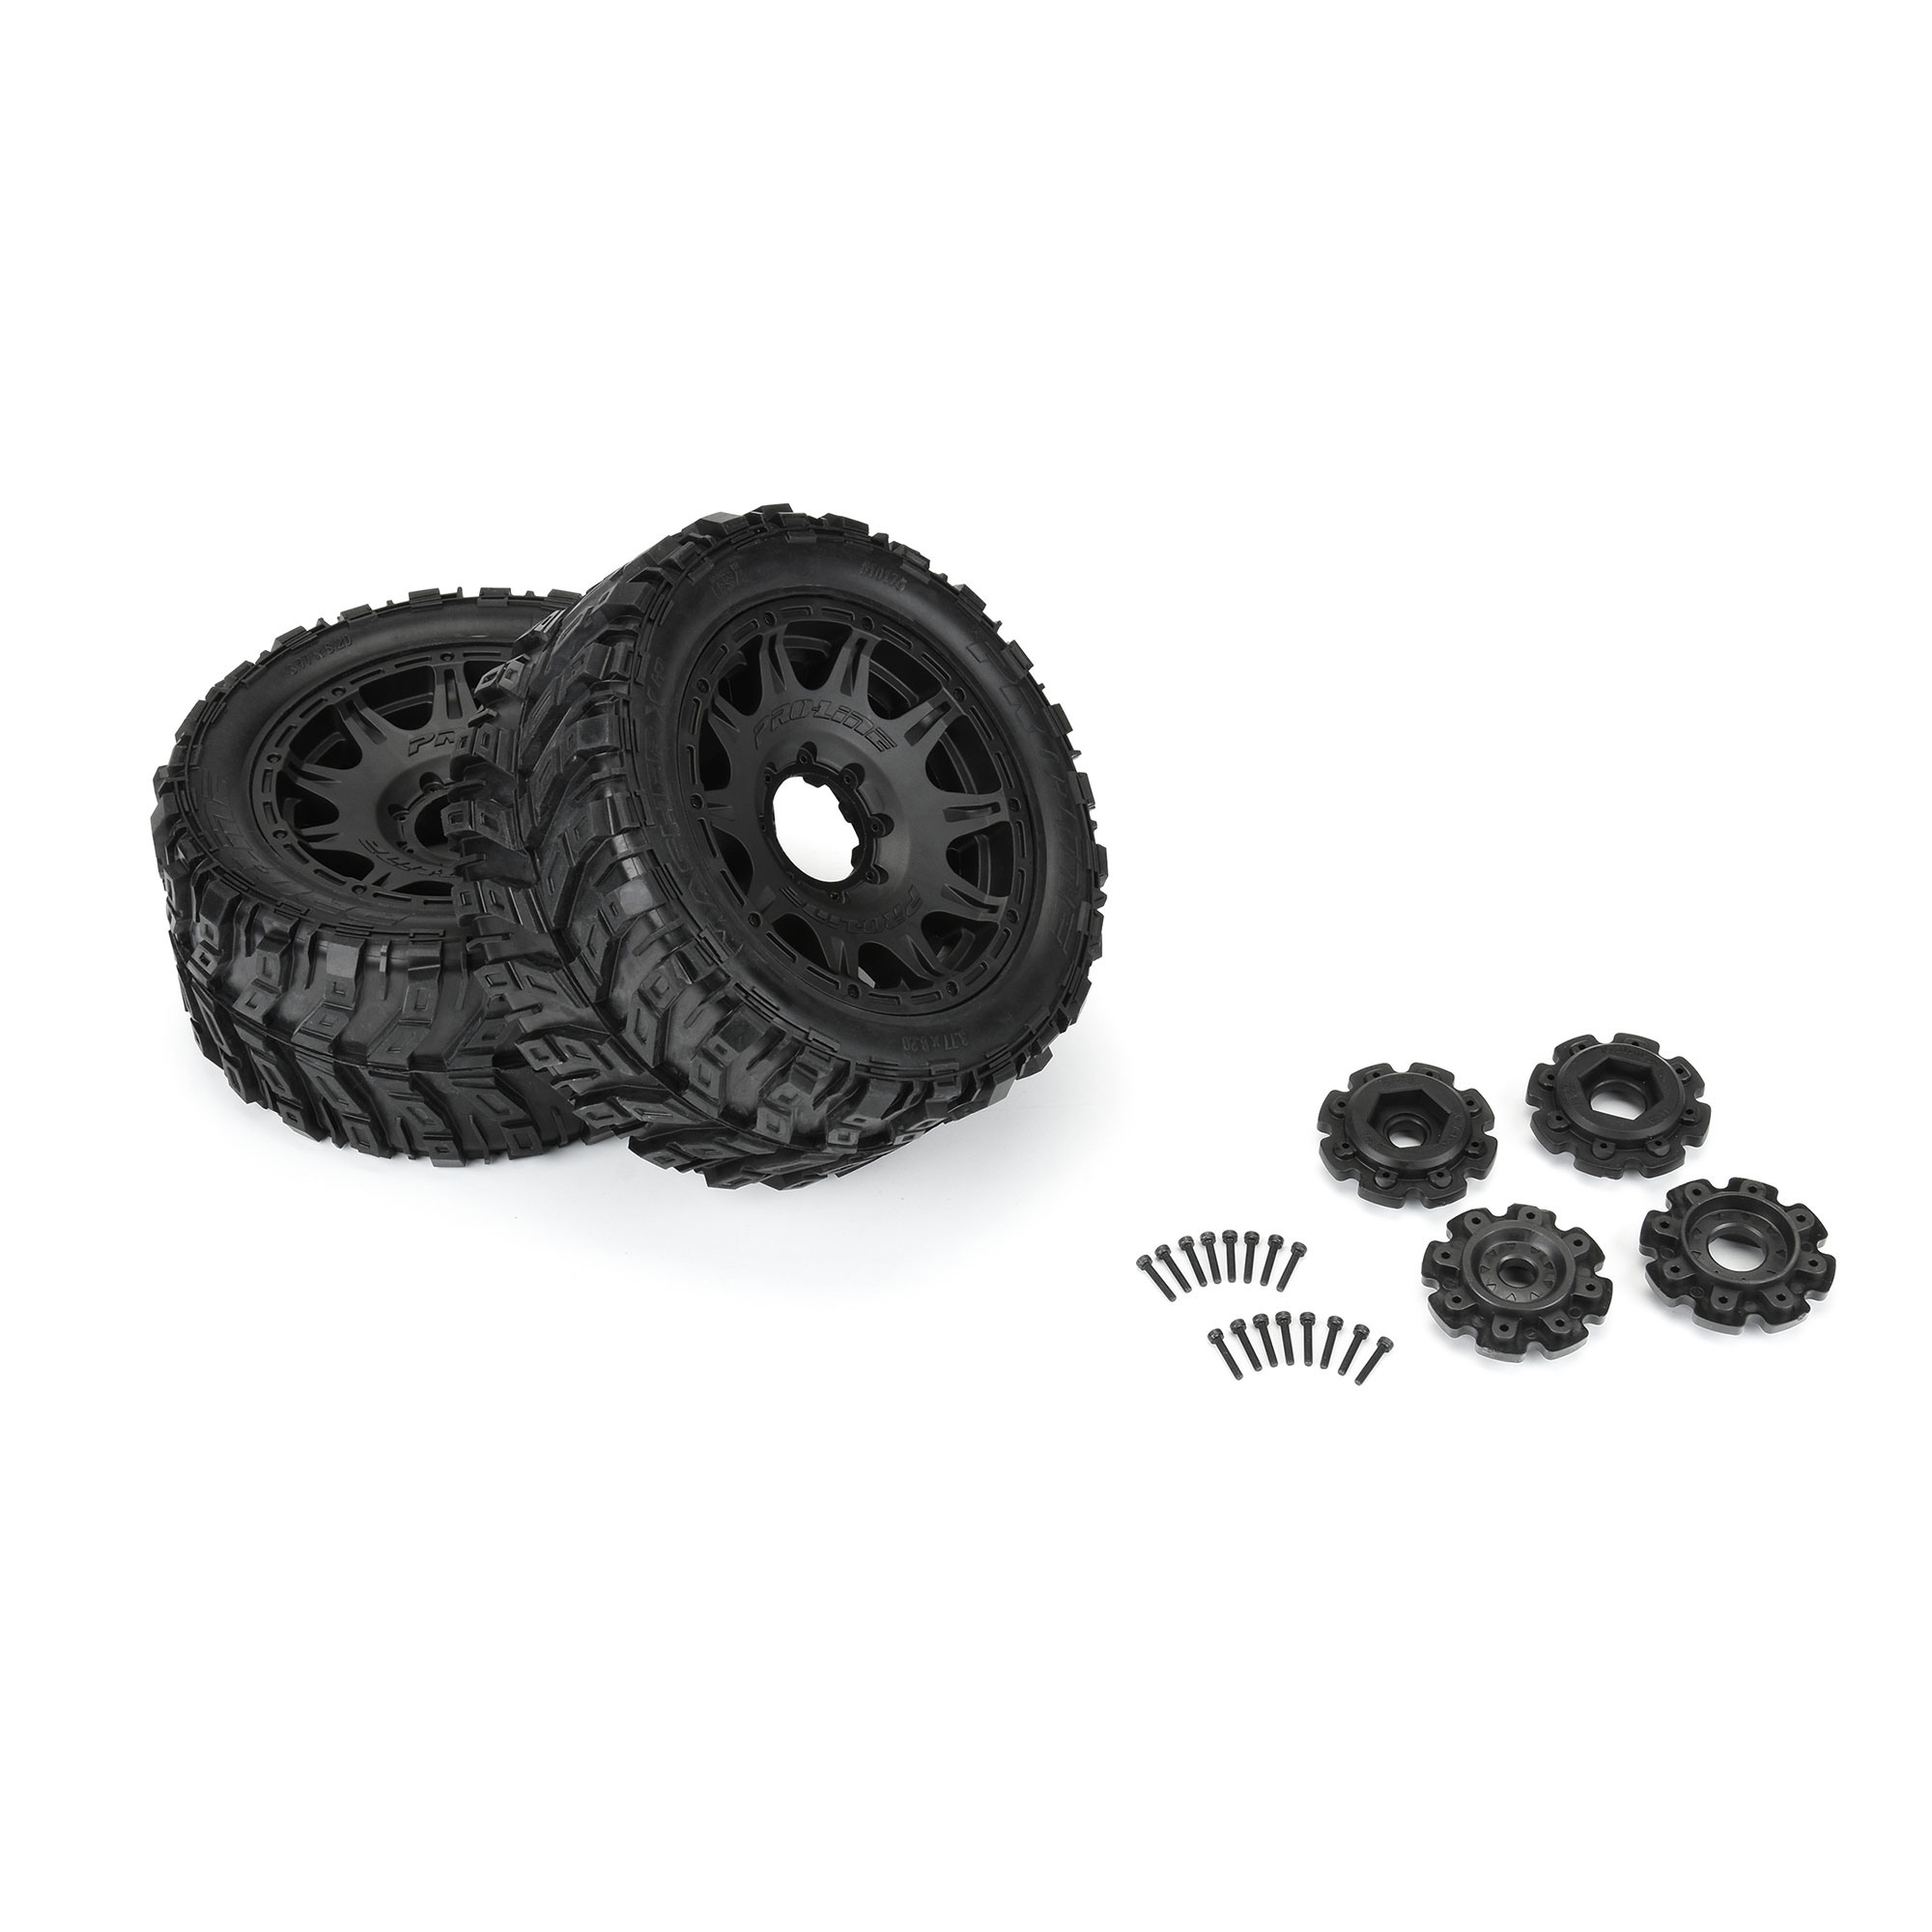 HERCHR 72mm/2.83in Tire Diameter 5mm Hex Wheel Rims & Rubber Tires Set RC  Tires for Unimog Model P06 RC Car Crawler Car(Green)